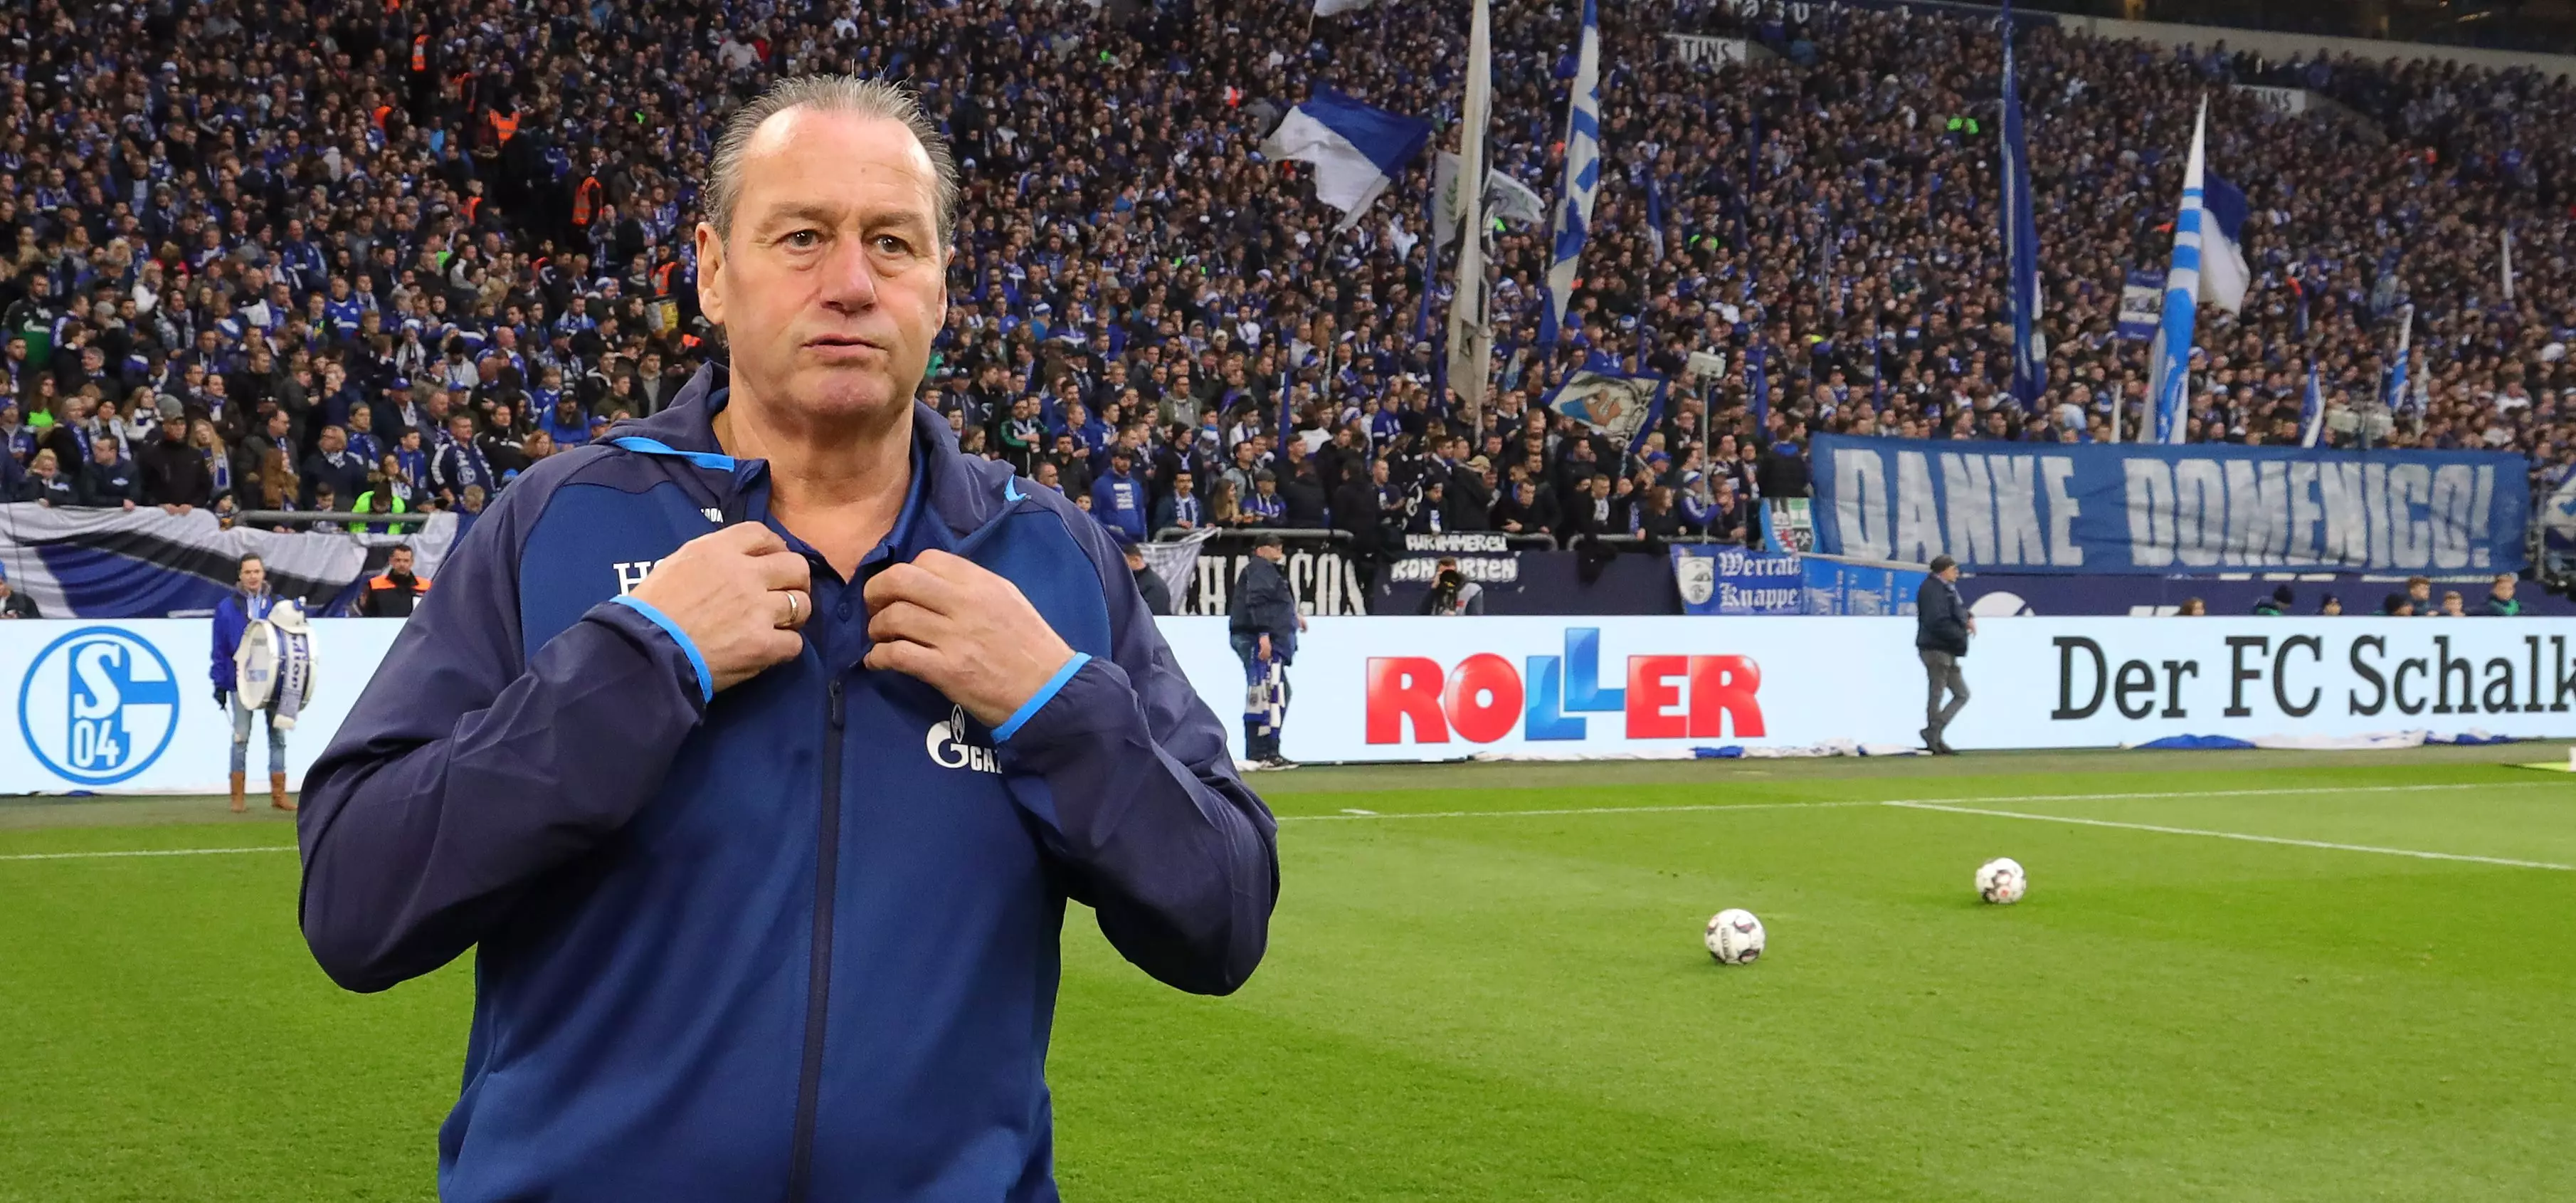 Domenico Tedesco, the former manager of FC Schalke (Image